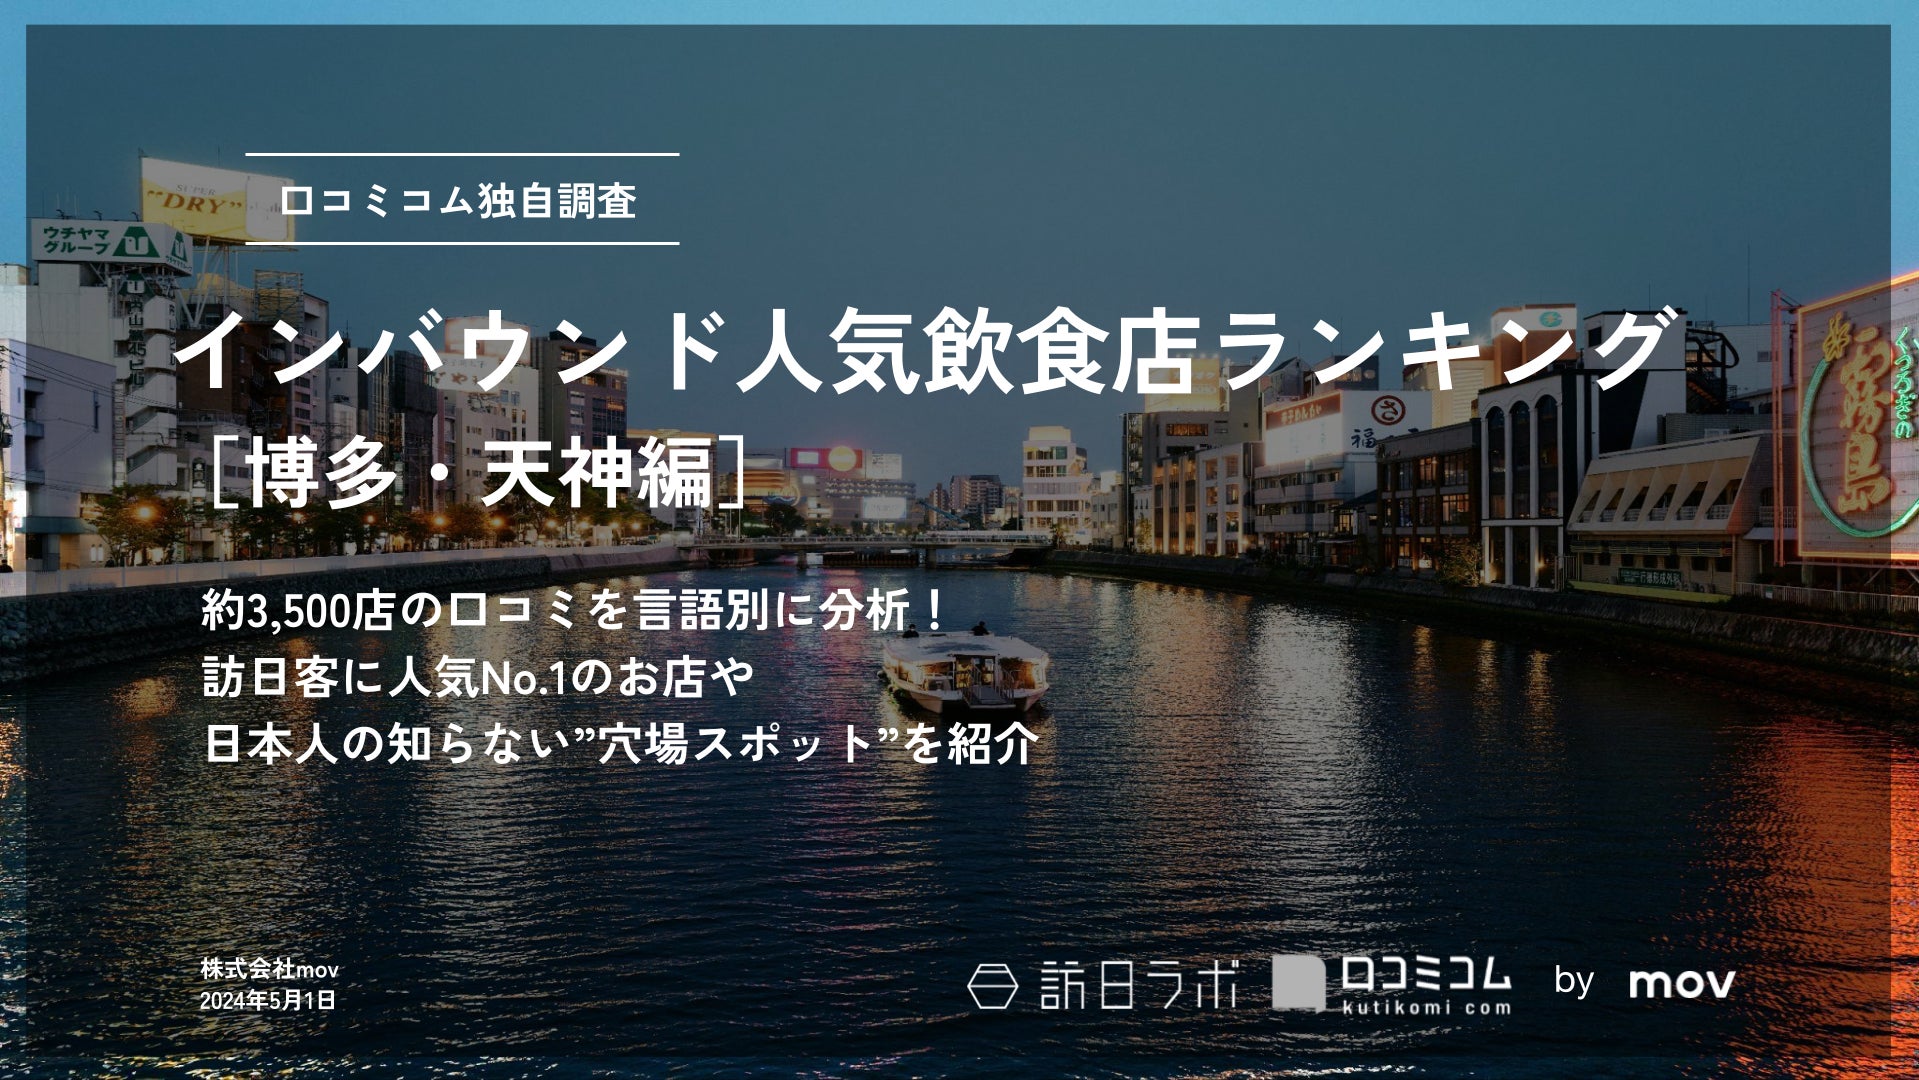 CAMPARI JAPAN株式会社、7月1日より、フレンチコニャック「クルボアジェ」の販売を開始！